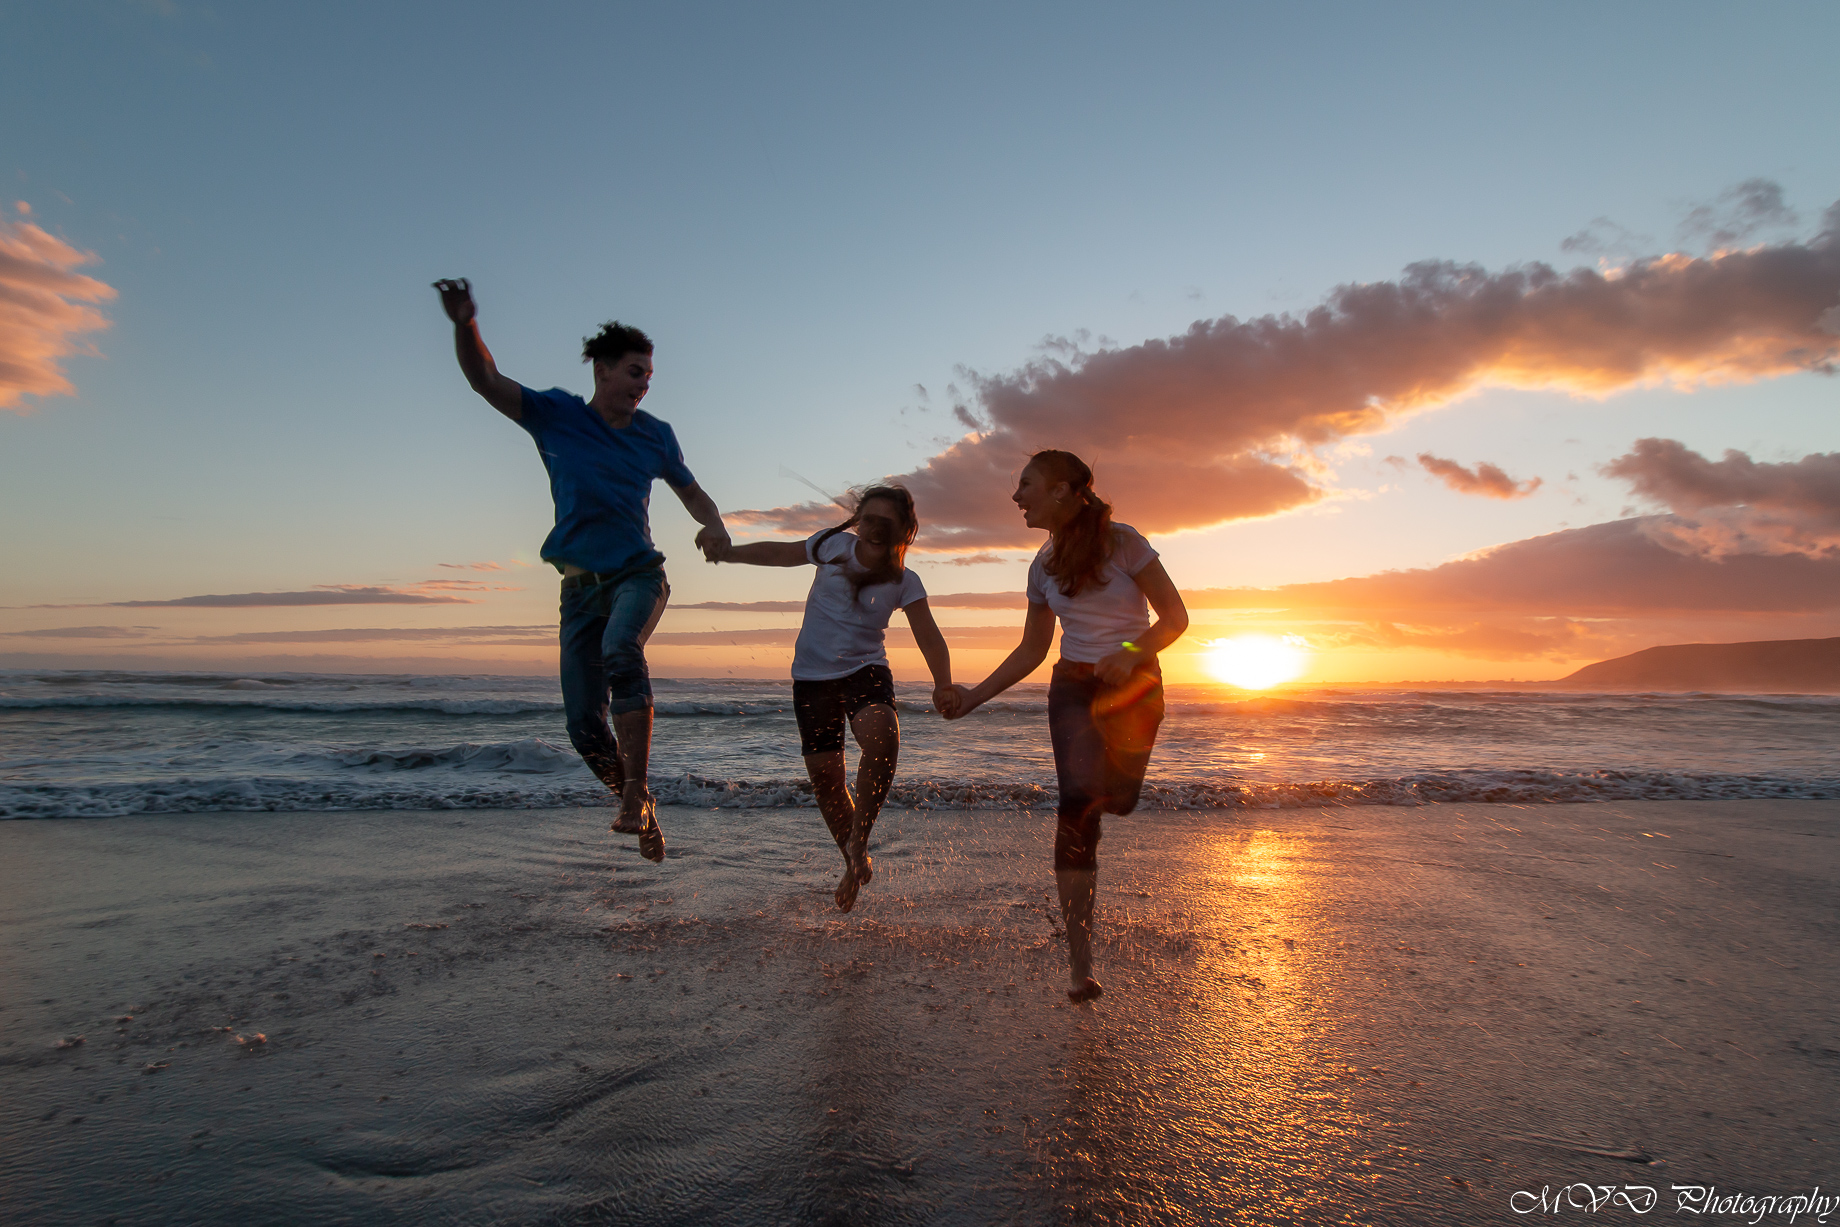 People having fun in the beaches of Hermanus at sunset 